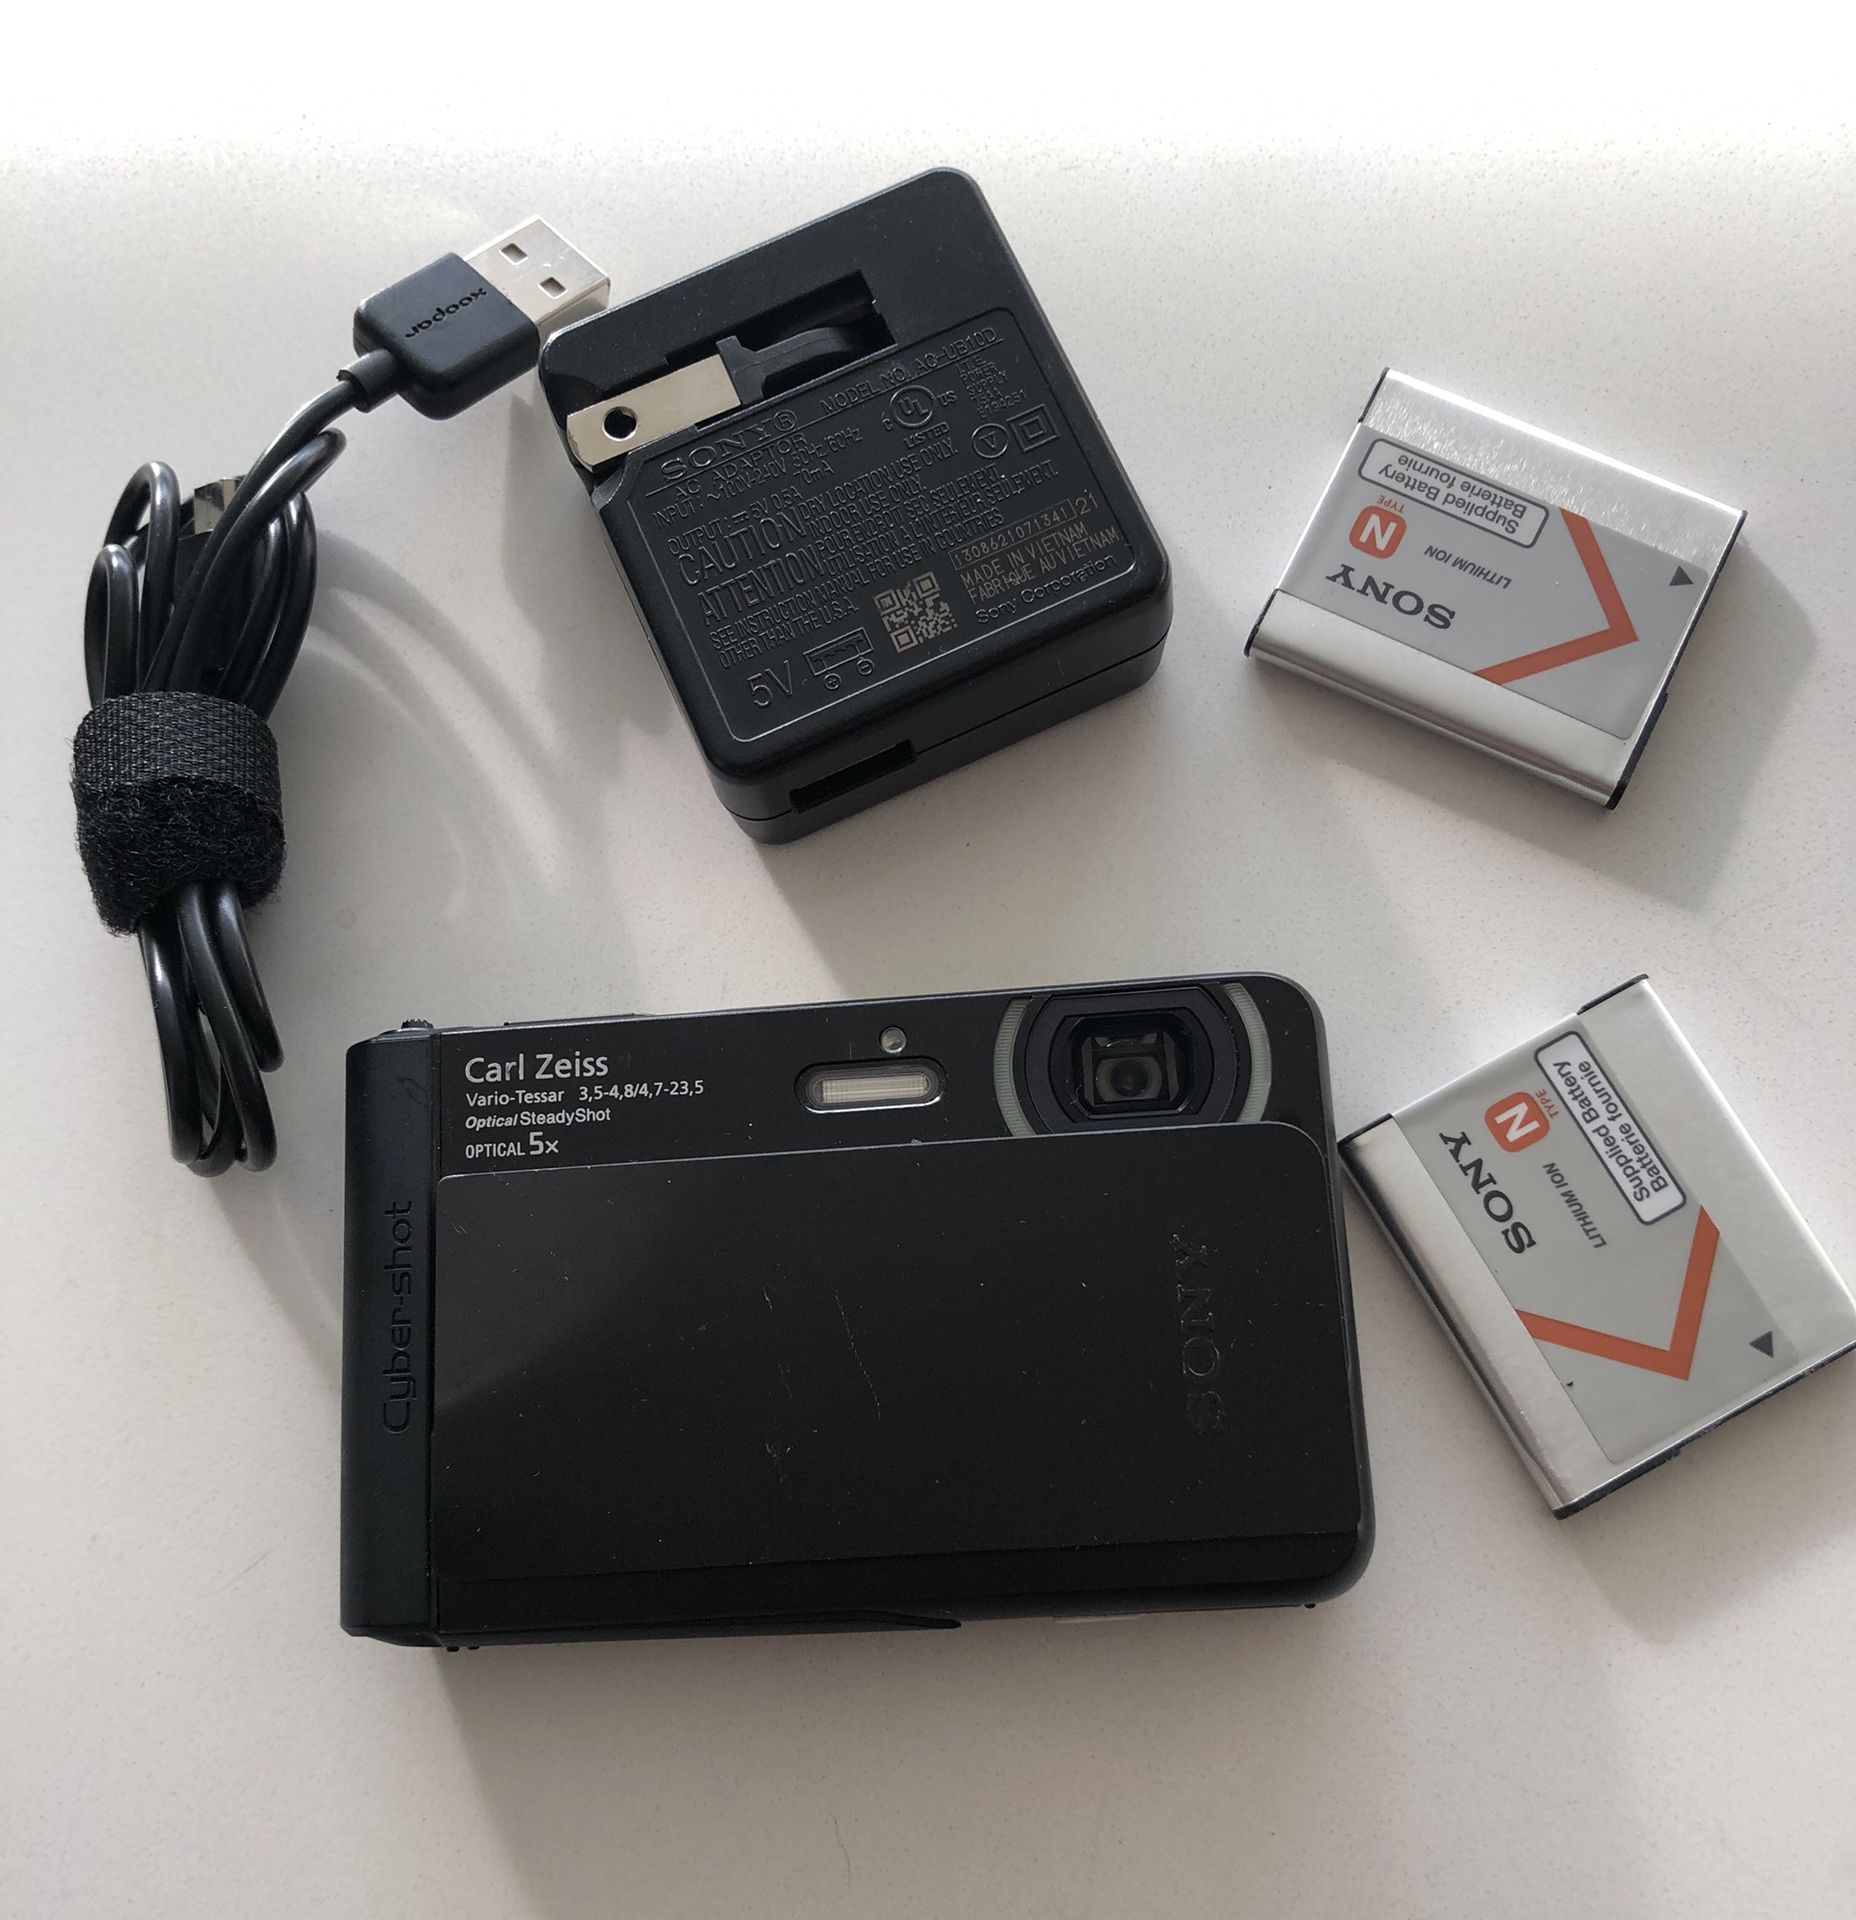 Sony Cyber-shot DSC-TX30 18.2MP Digital Camera - Black